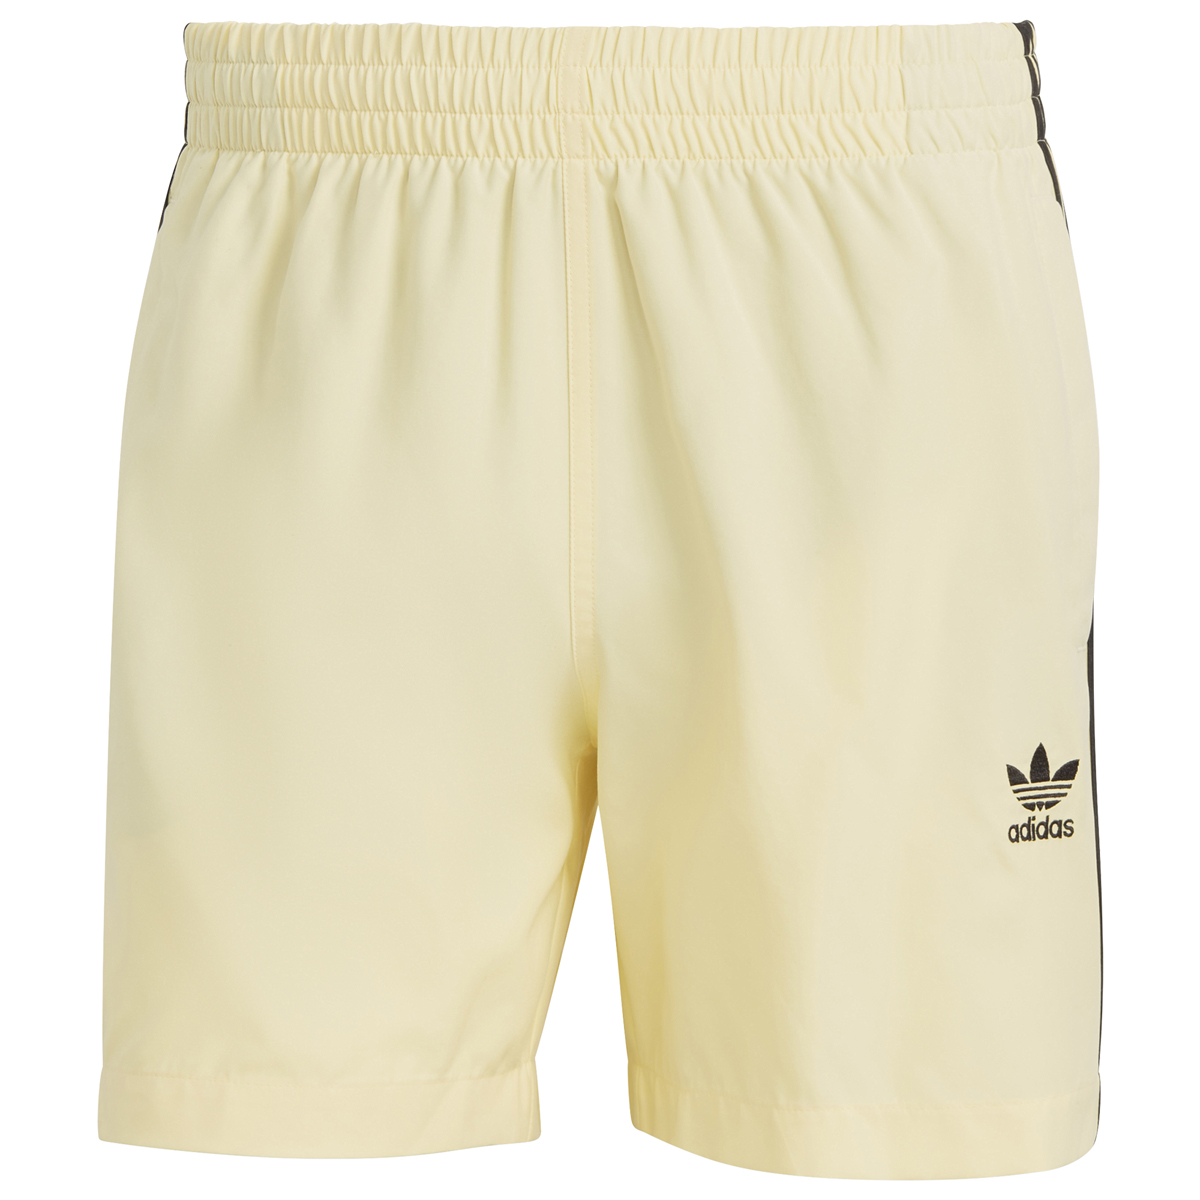 adidas-Originals-Sprinter-Shorts-Yellow